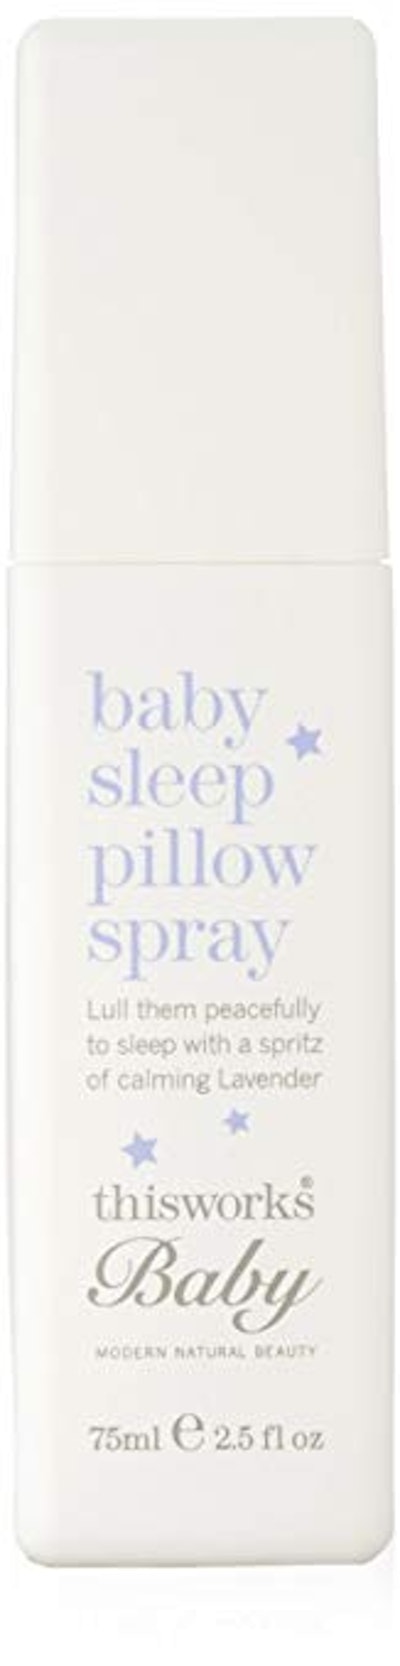 Baby Sleep Pillow Spray